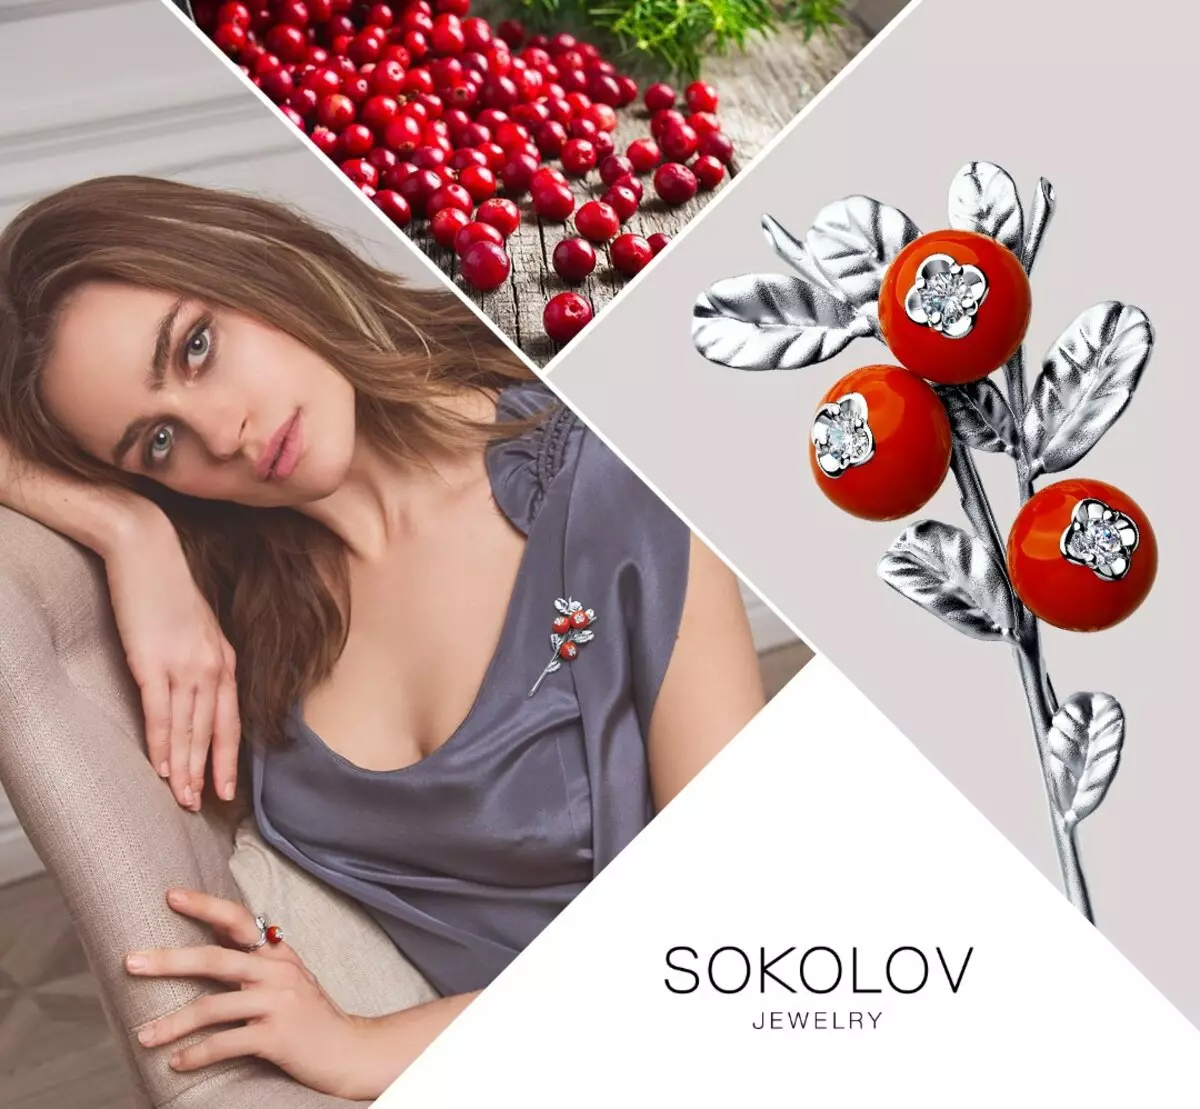 Sokolov Brooches (36 fotografija): Modeli srebra, popularnih srebrnih brootova - leptir, hummingbird, firebird 15526_29